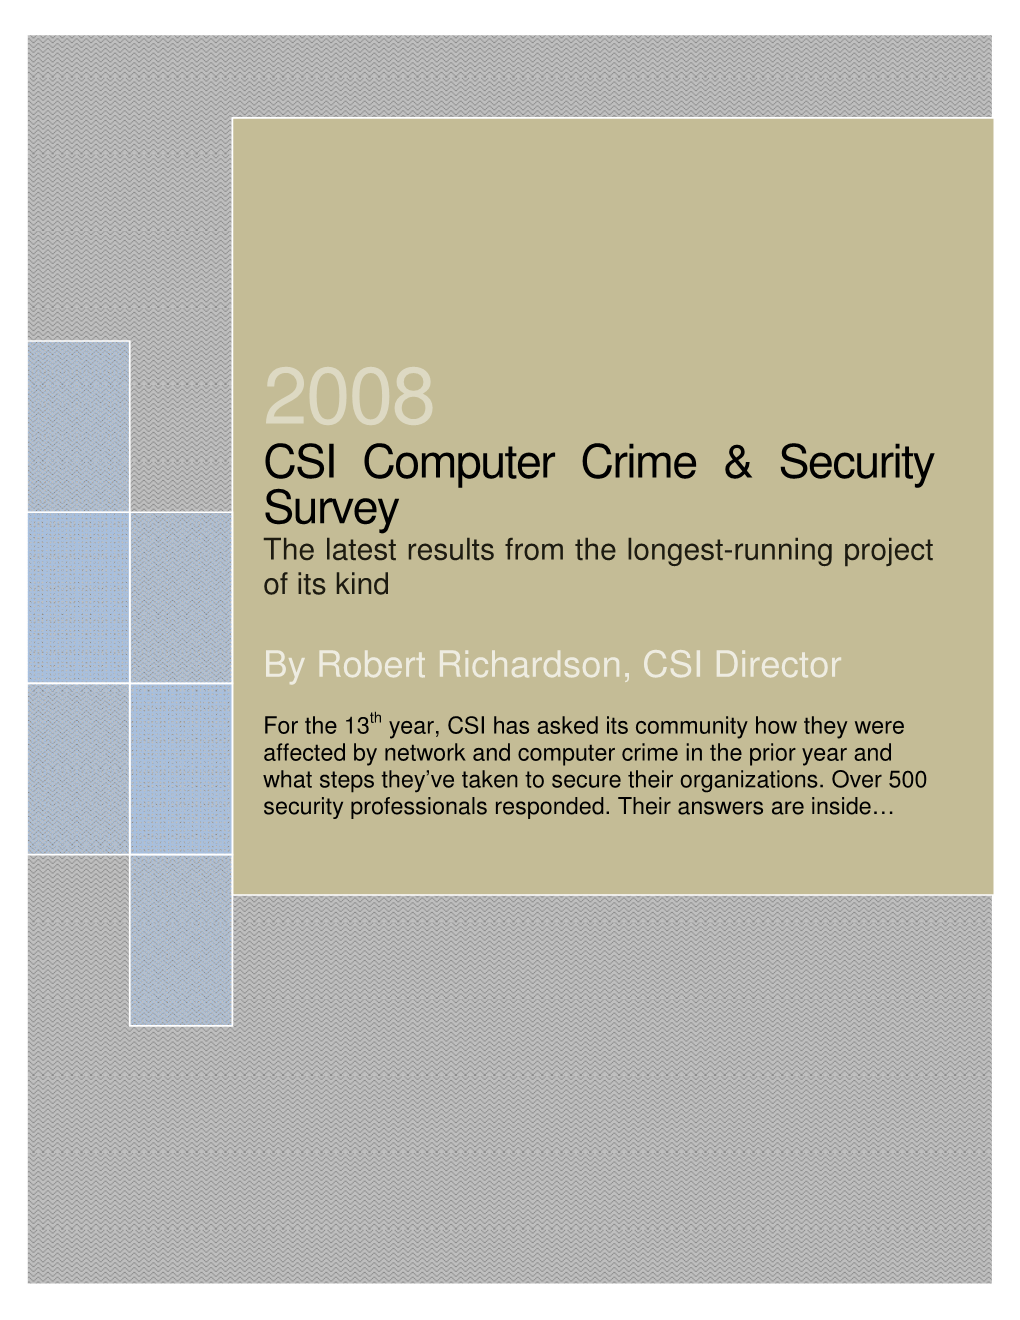 CSI Computer Crime & Security Survey